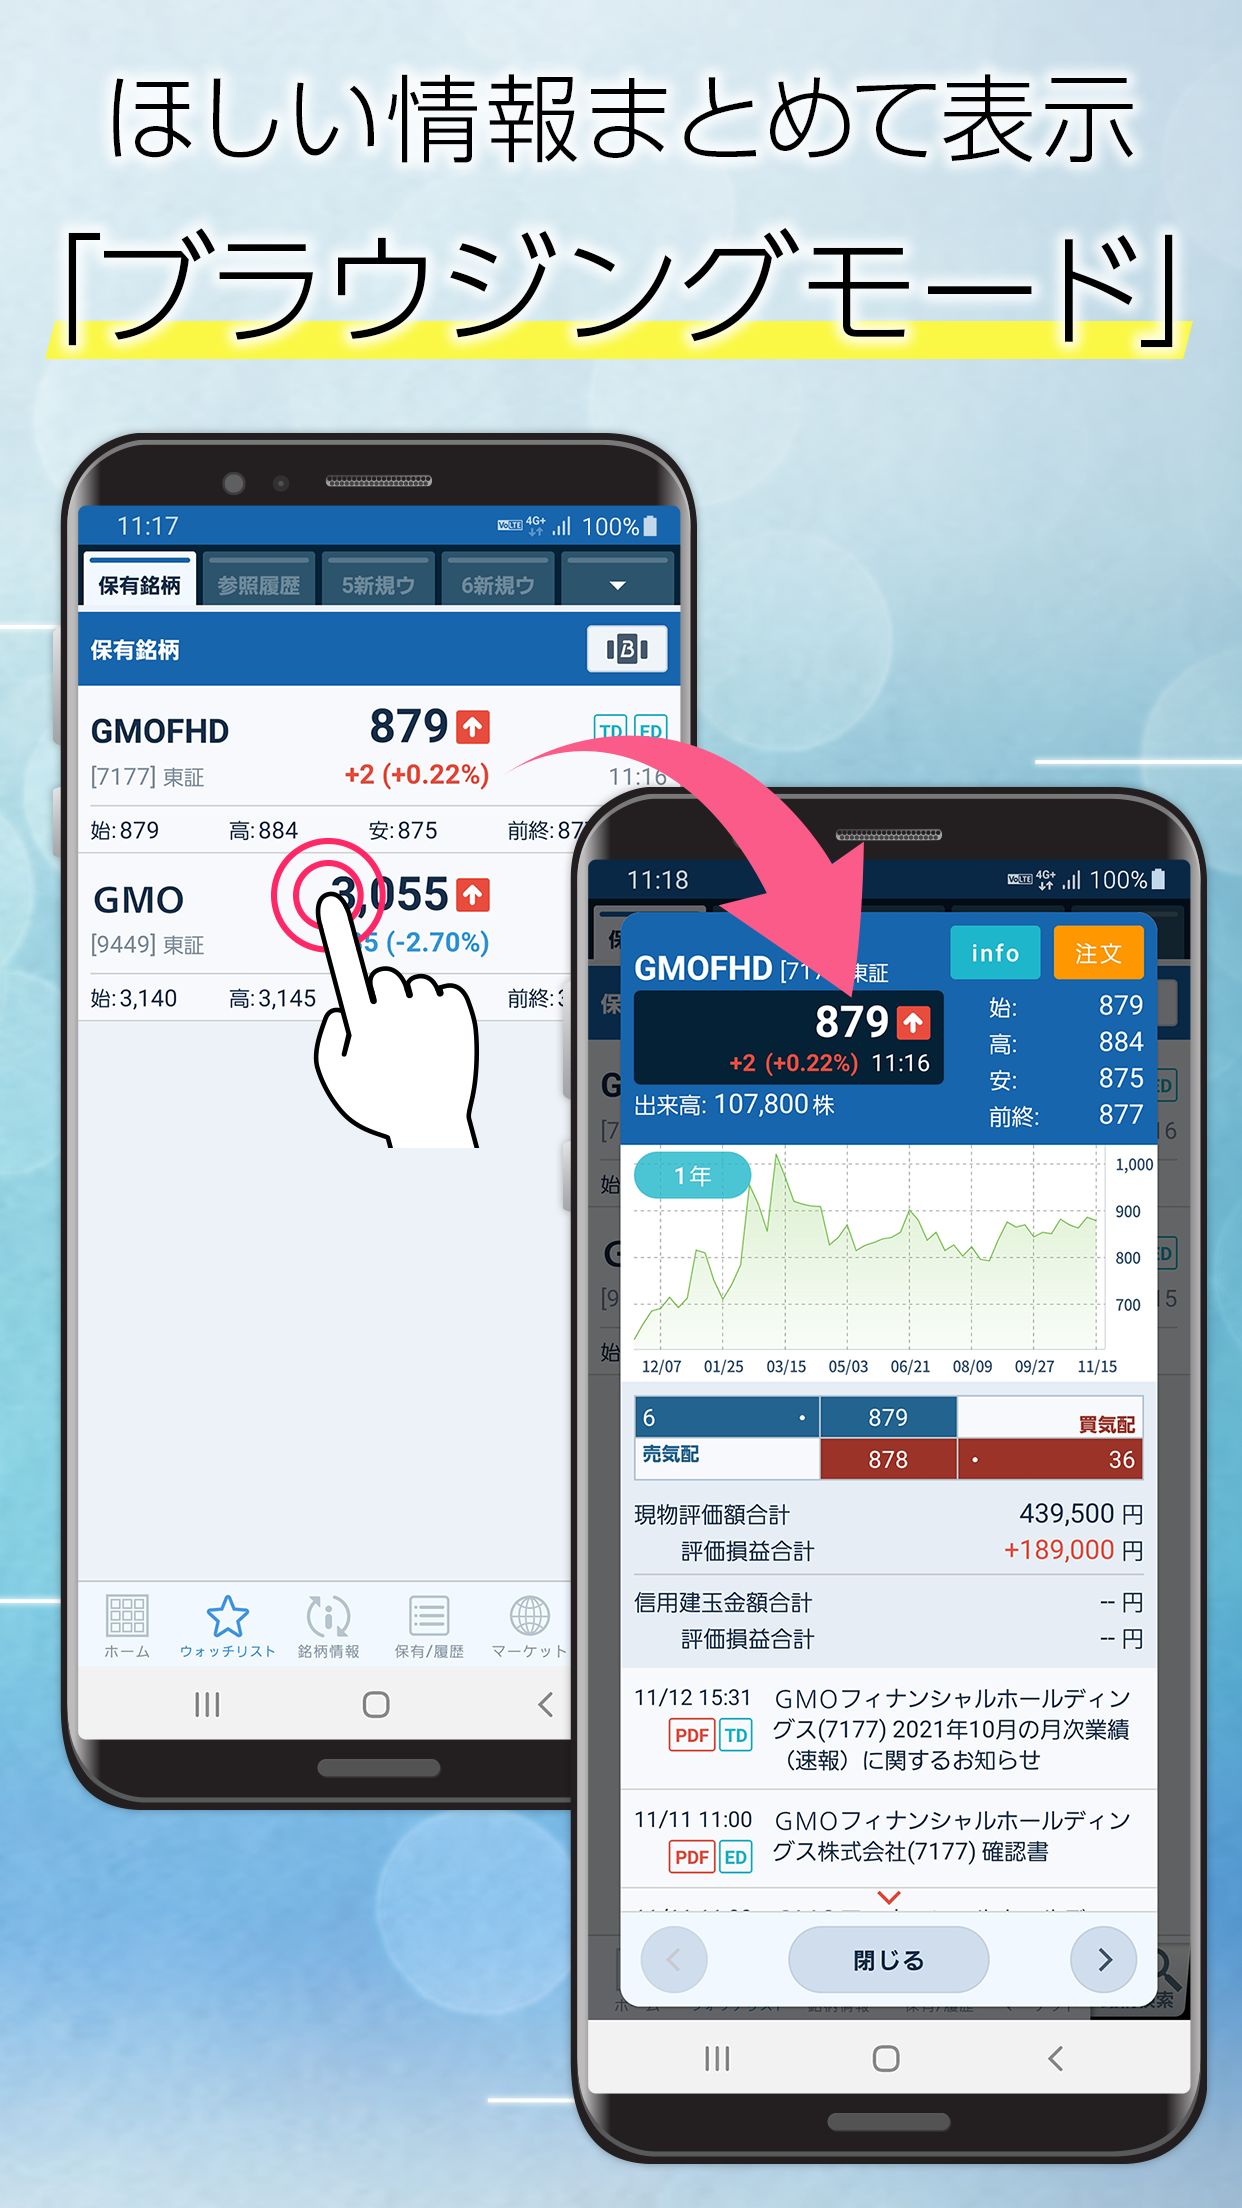 Android application GMOクリック 株 screenshort